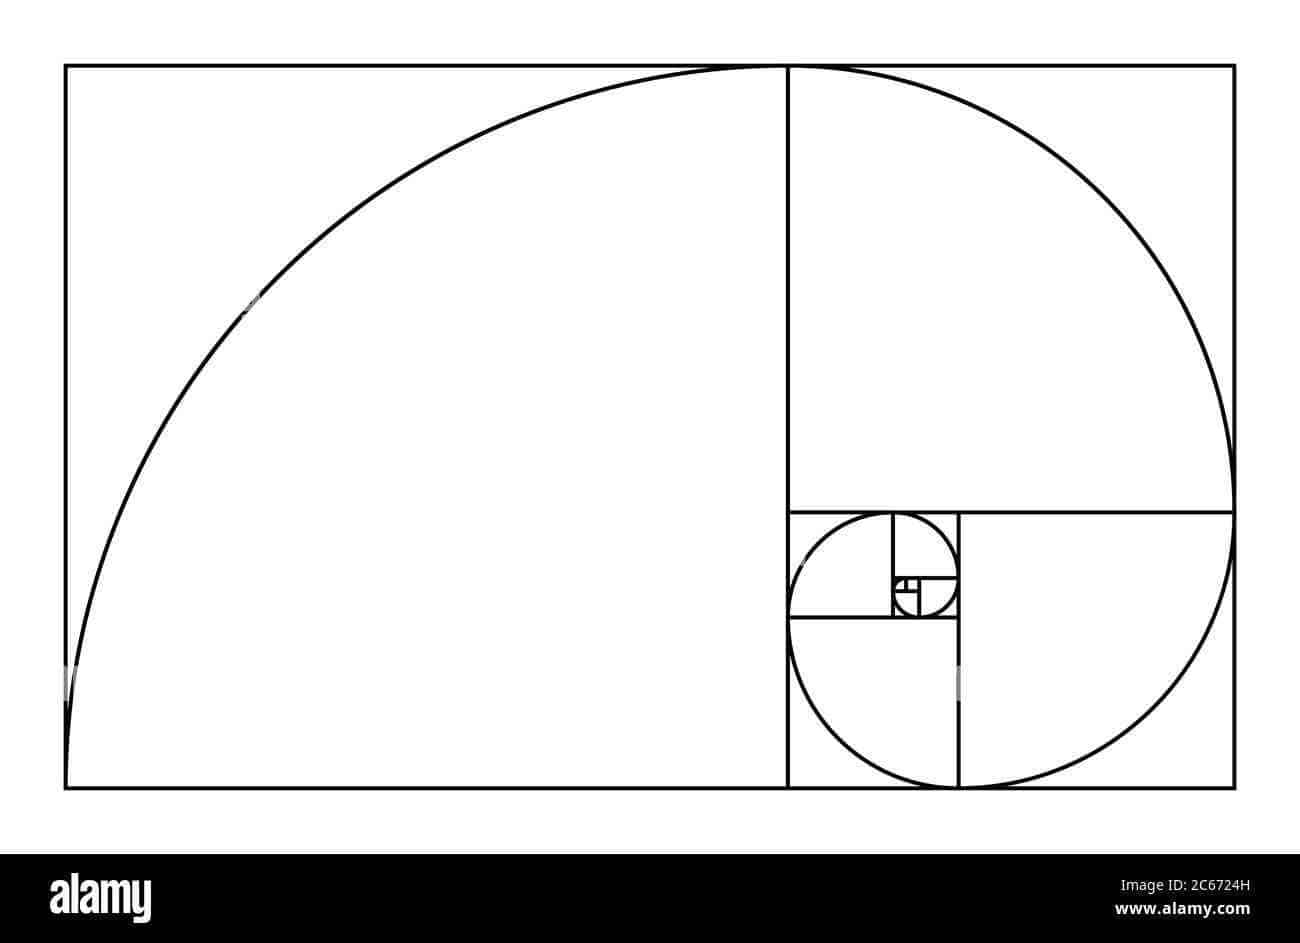 Why is Fibonacci important?